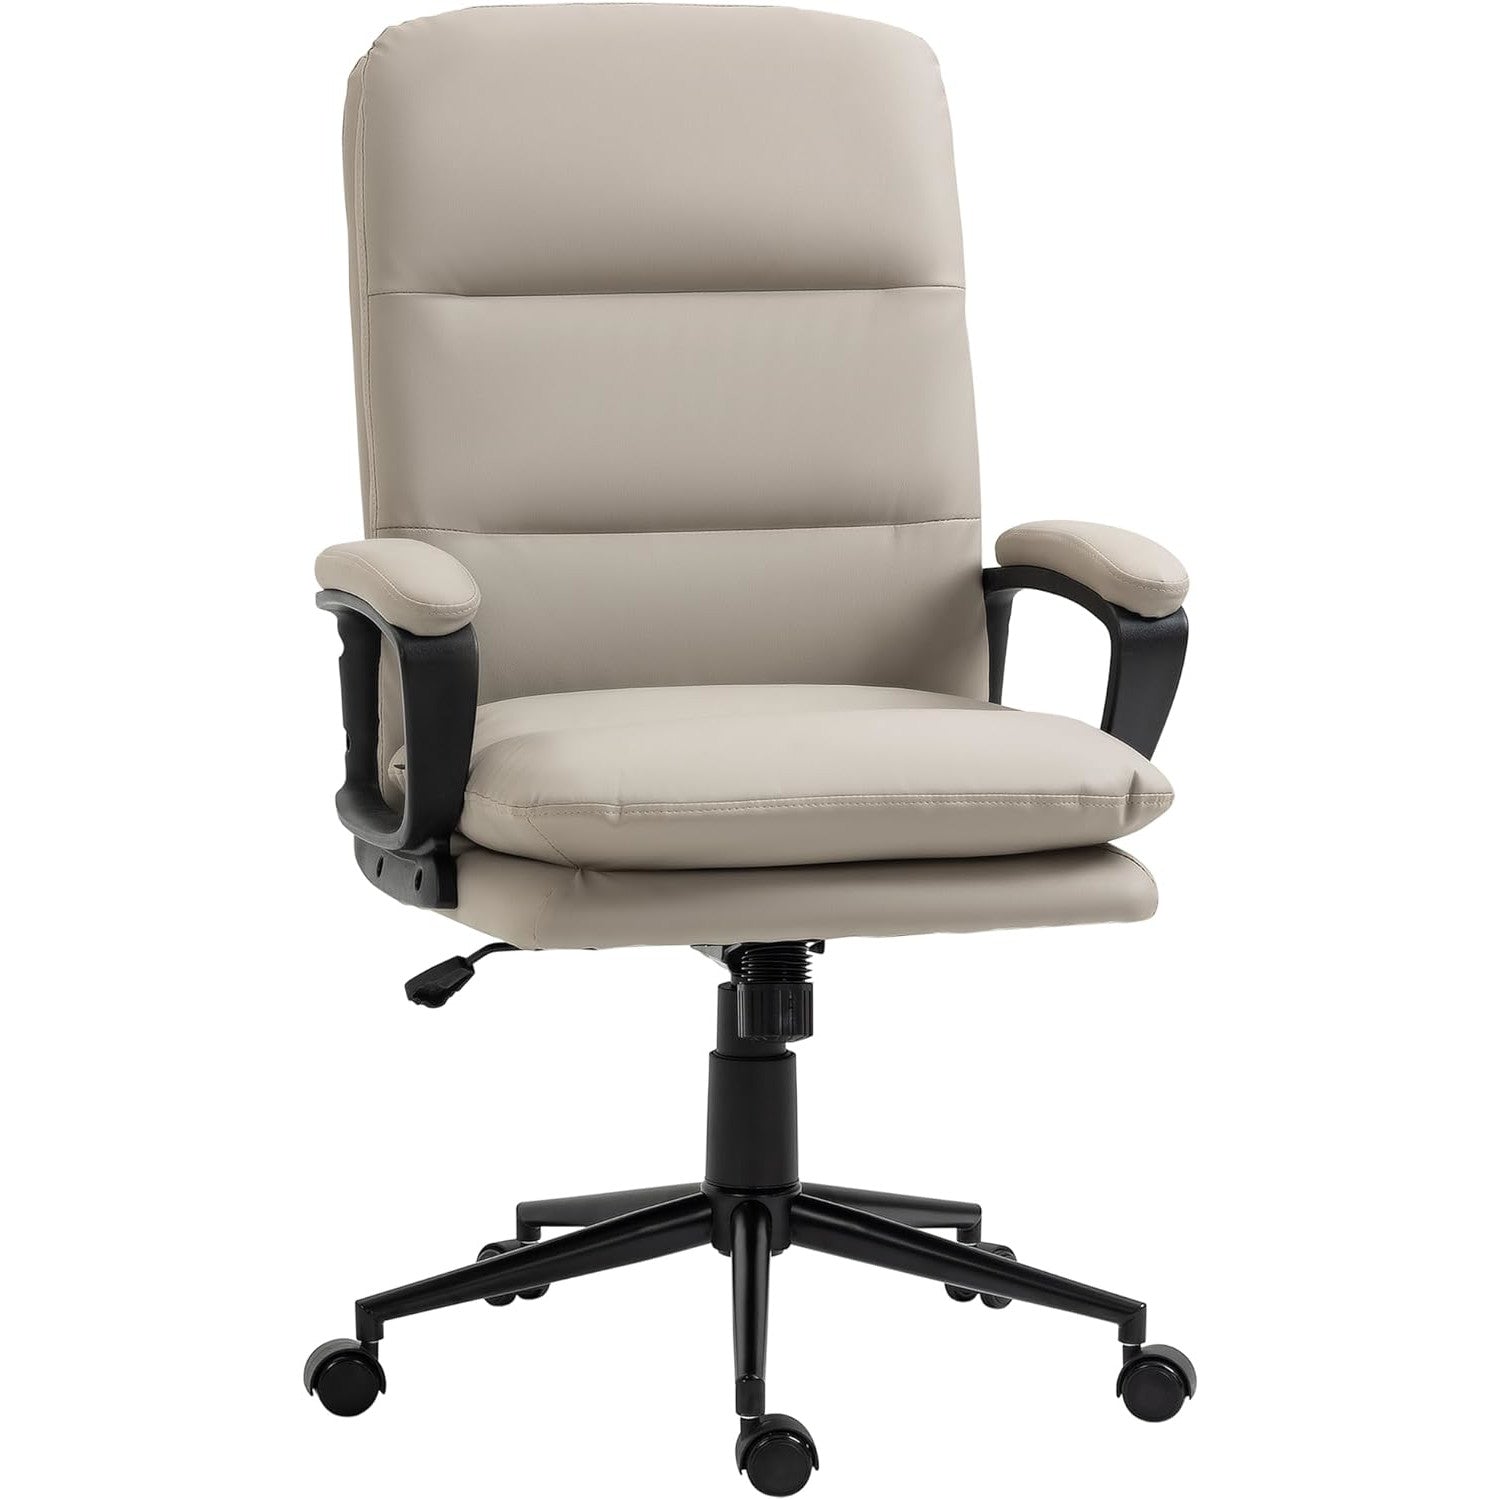 ProperAV Extra PU Leather Ergonomic Adjustable Office Chair - Light Grey - maplin.co.uk